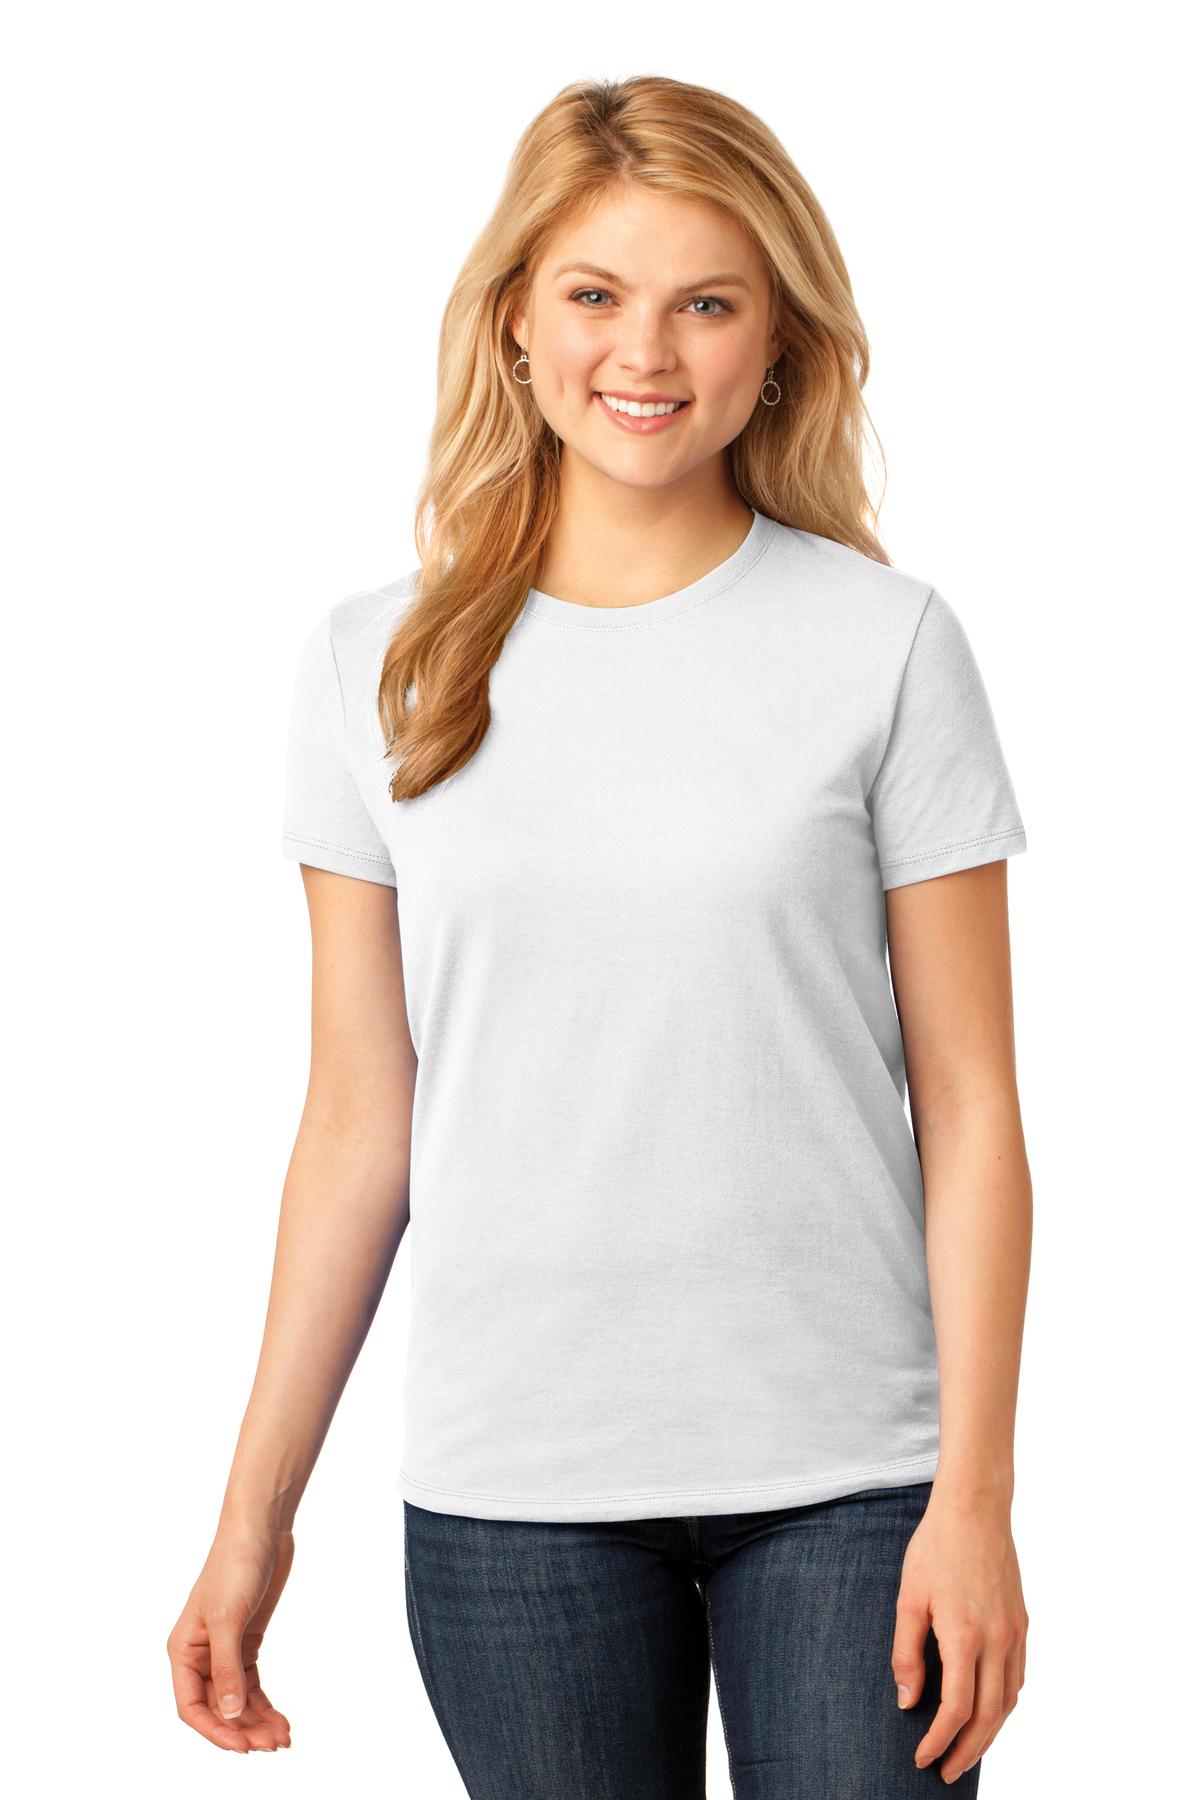 Port & Company Ladies Hospitality T-Shirts ® Ladies Core Cotton Tee.-Port & Company